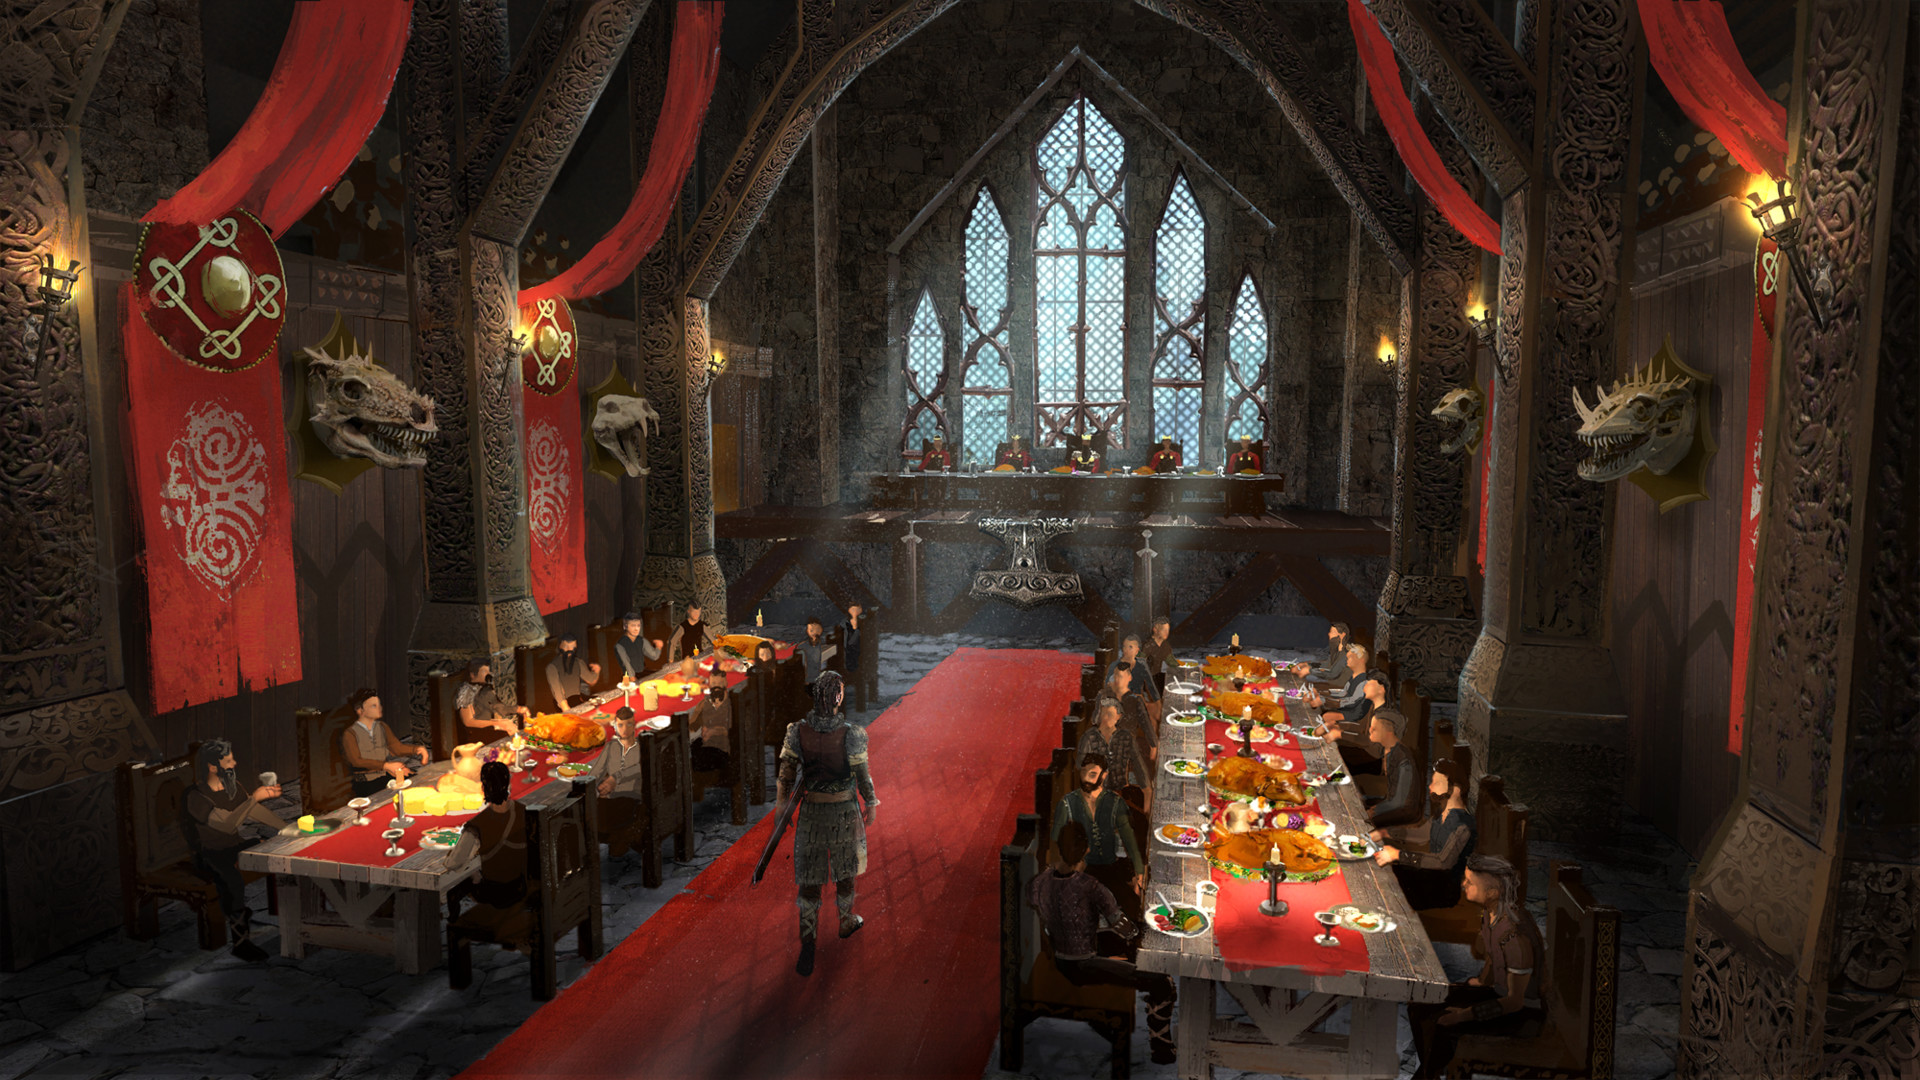 Royal Medieval Dining Room - Elke dag worden duizenden nieuwe ...